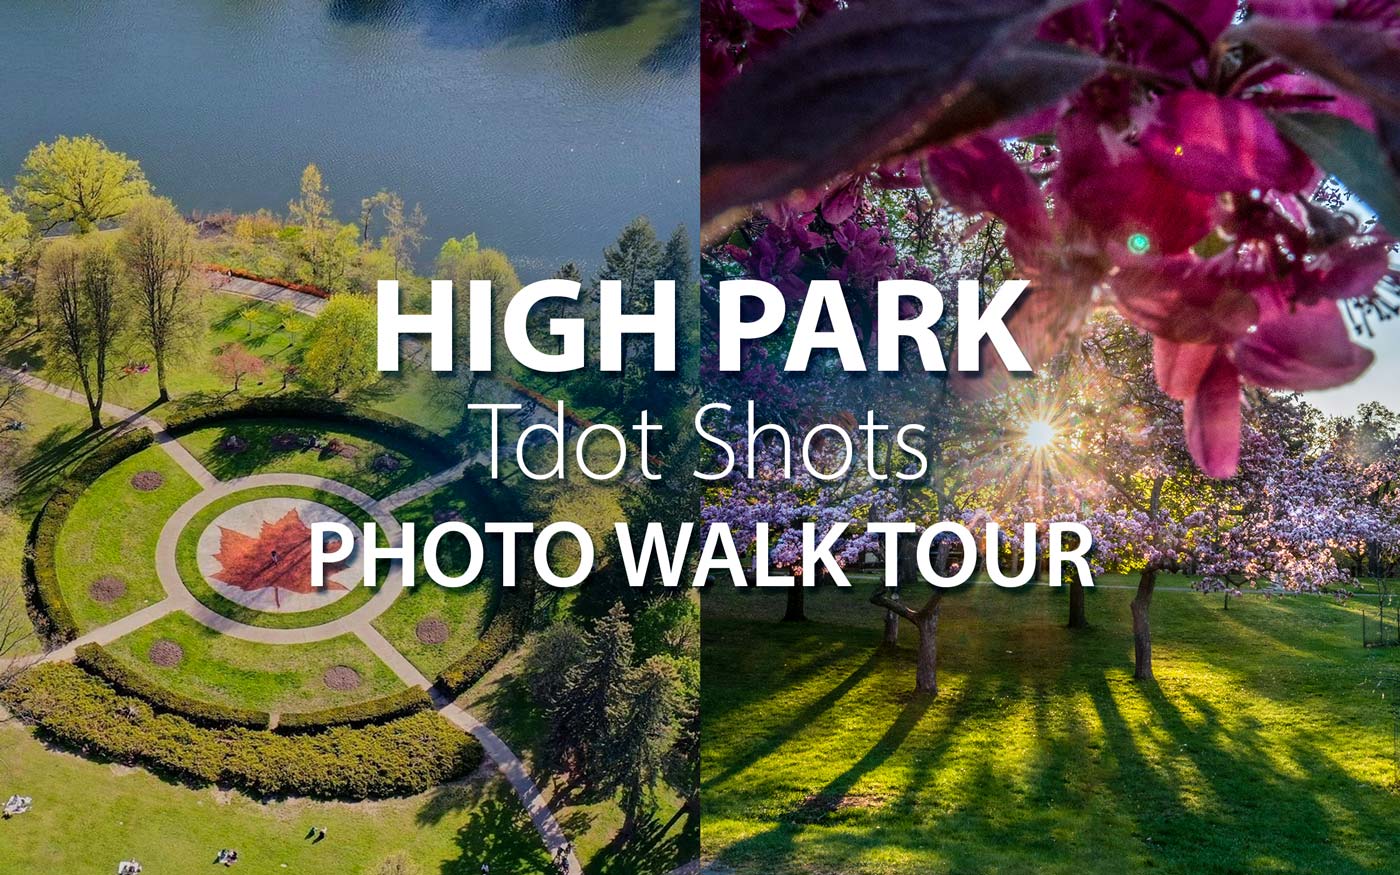 High Park photo walk with Tdot Shots